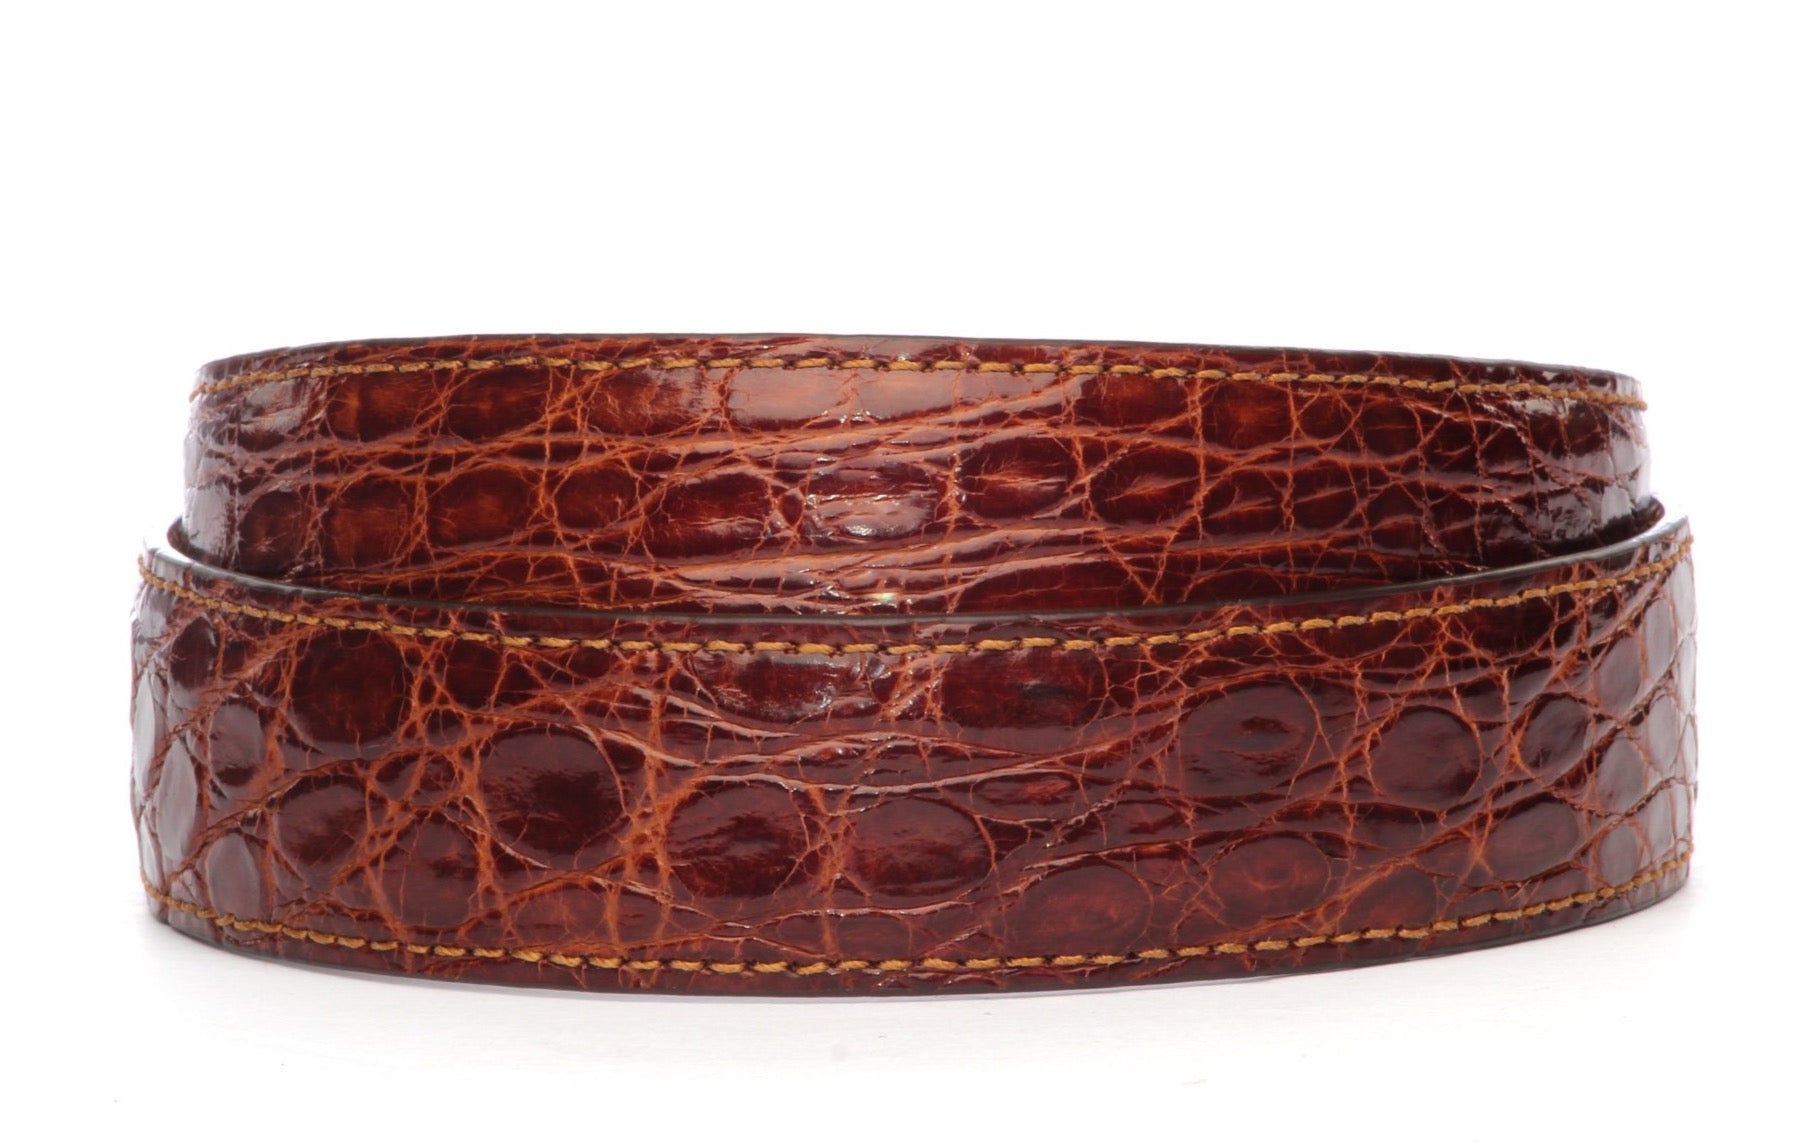 Men's Genuine Leather Belt Crocodile Pattern Belt Automatic Buckle